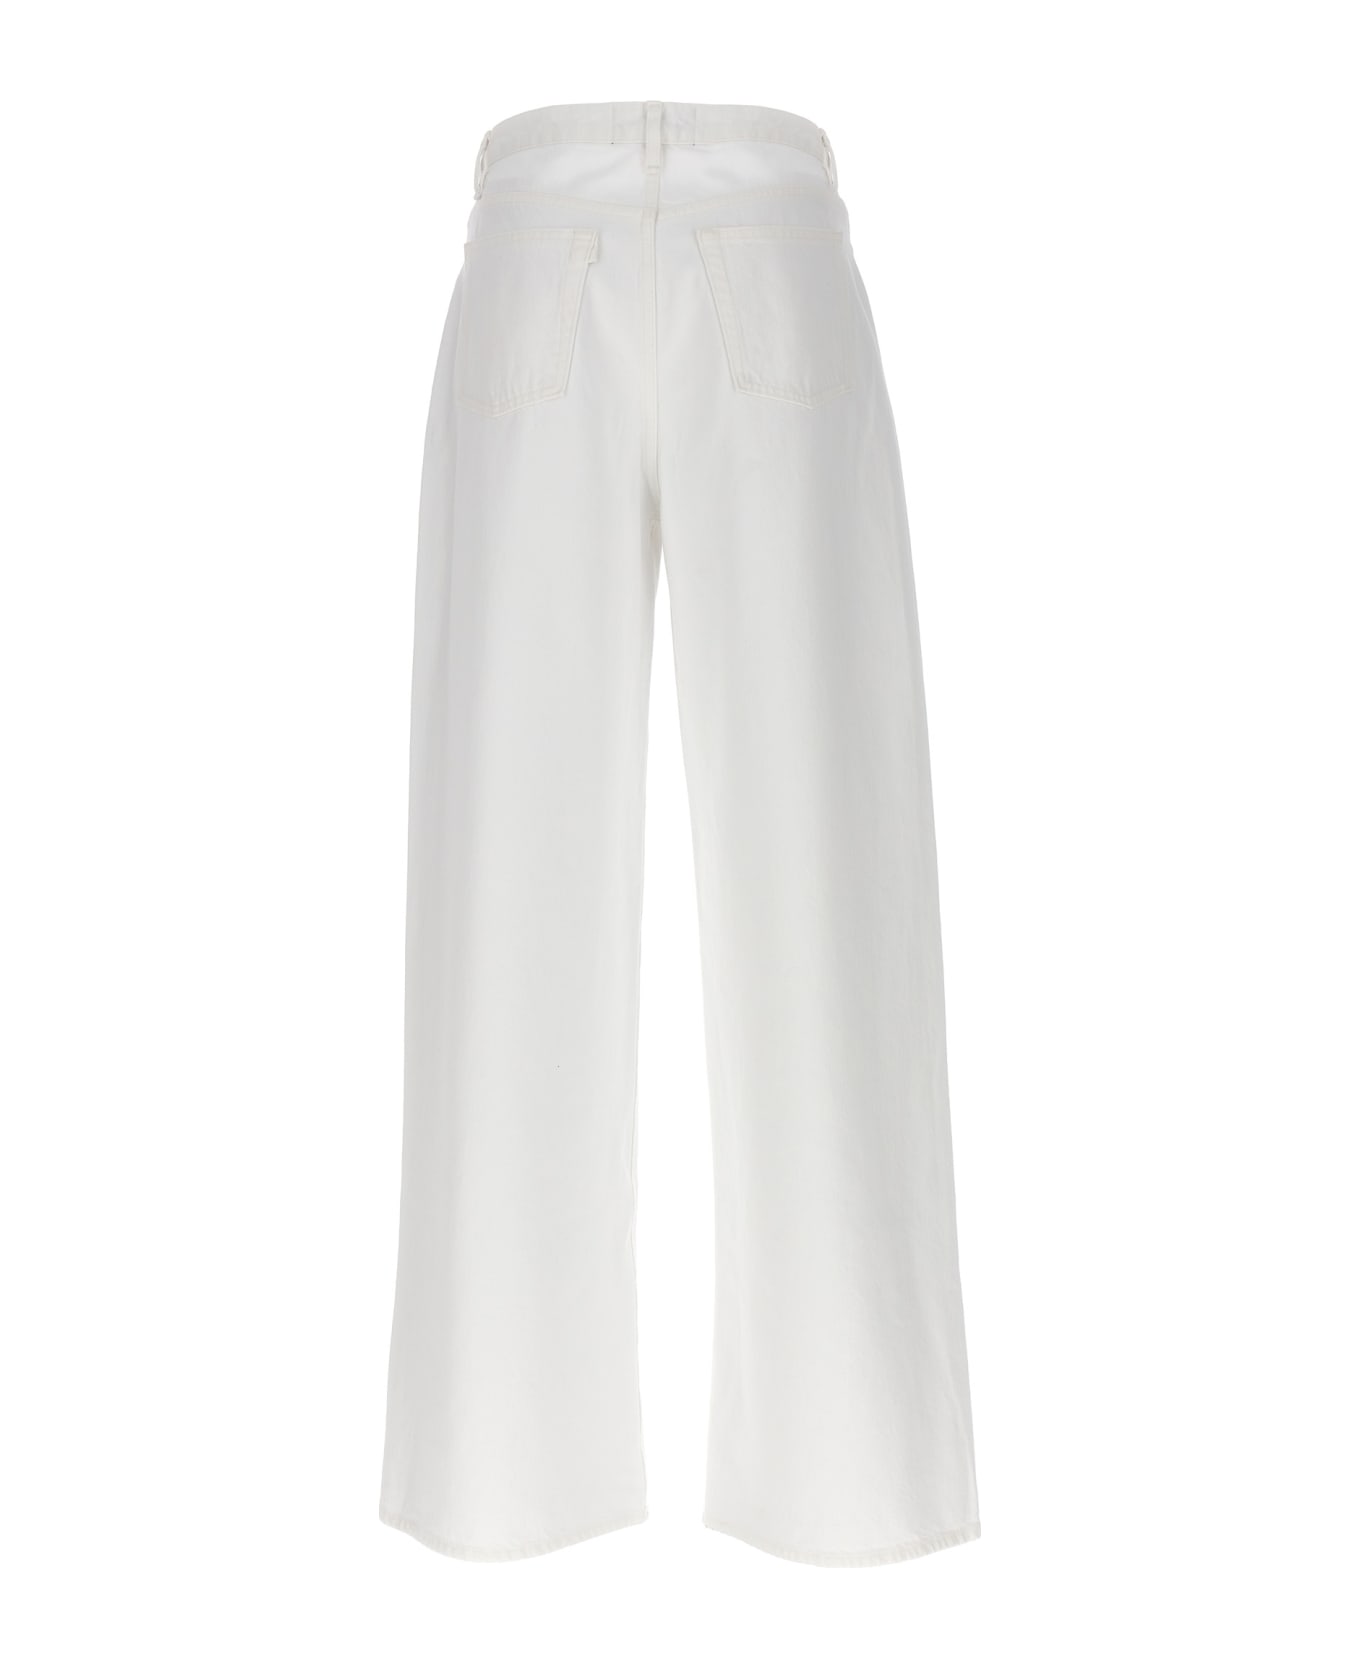 3x1 'flip' Jeans - White ボトムス